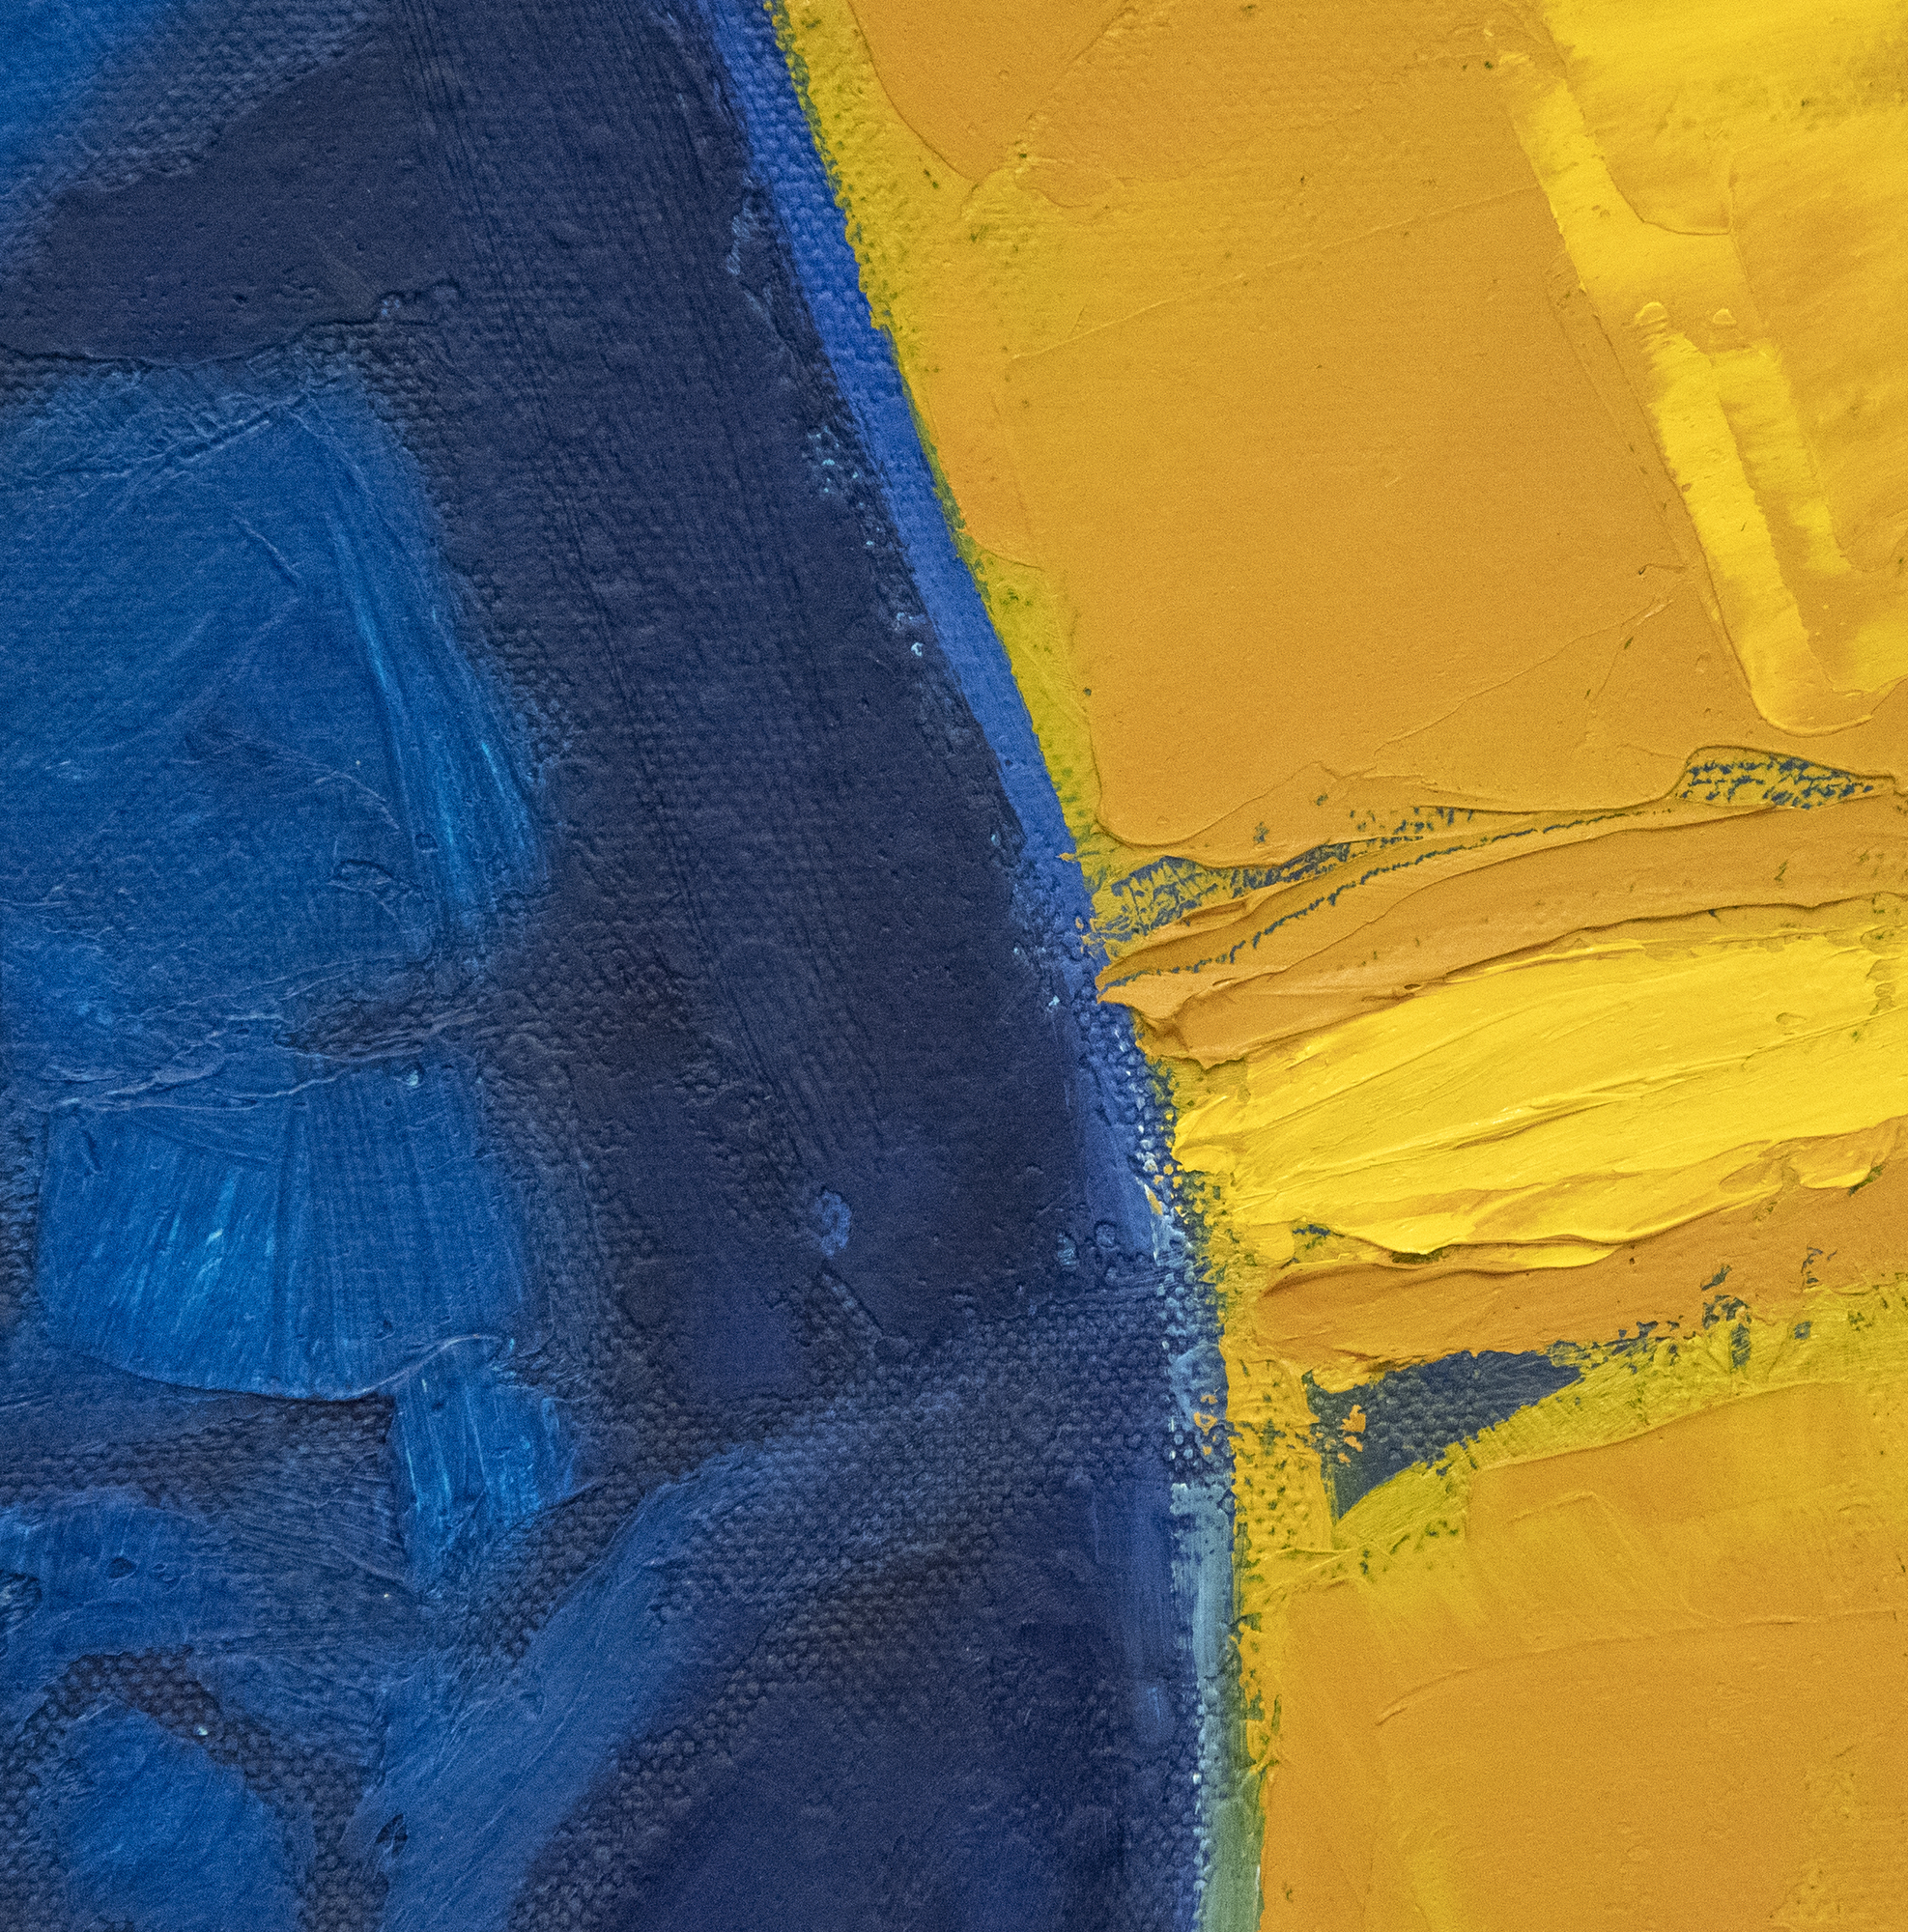 JAE KON PARK - Sin título - óleo sobre tela - 36 x 45 1/2 in.